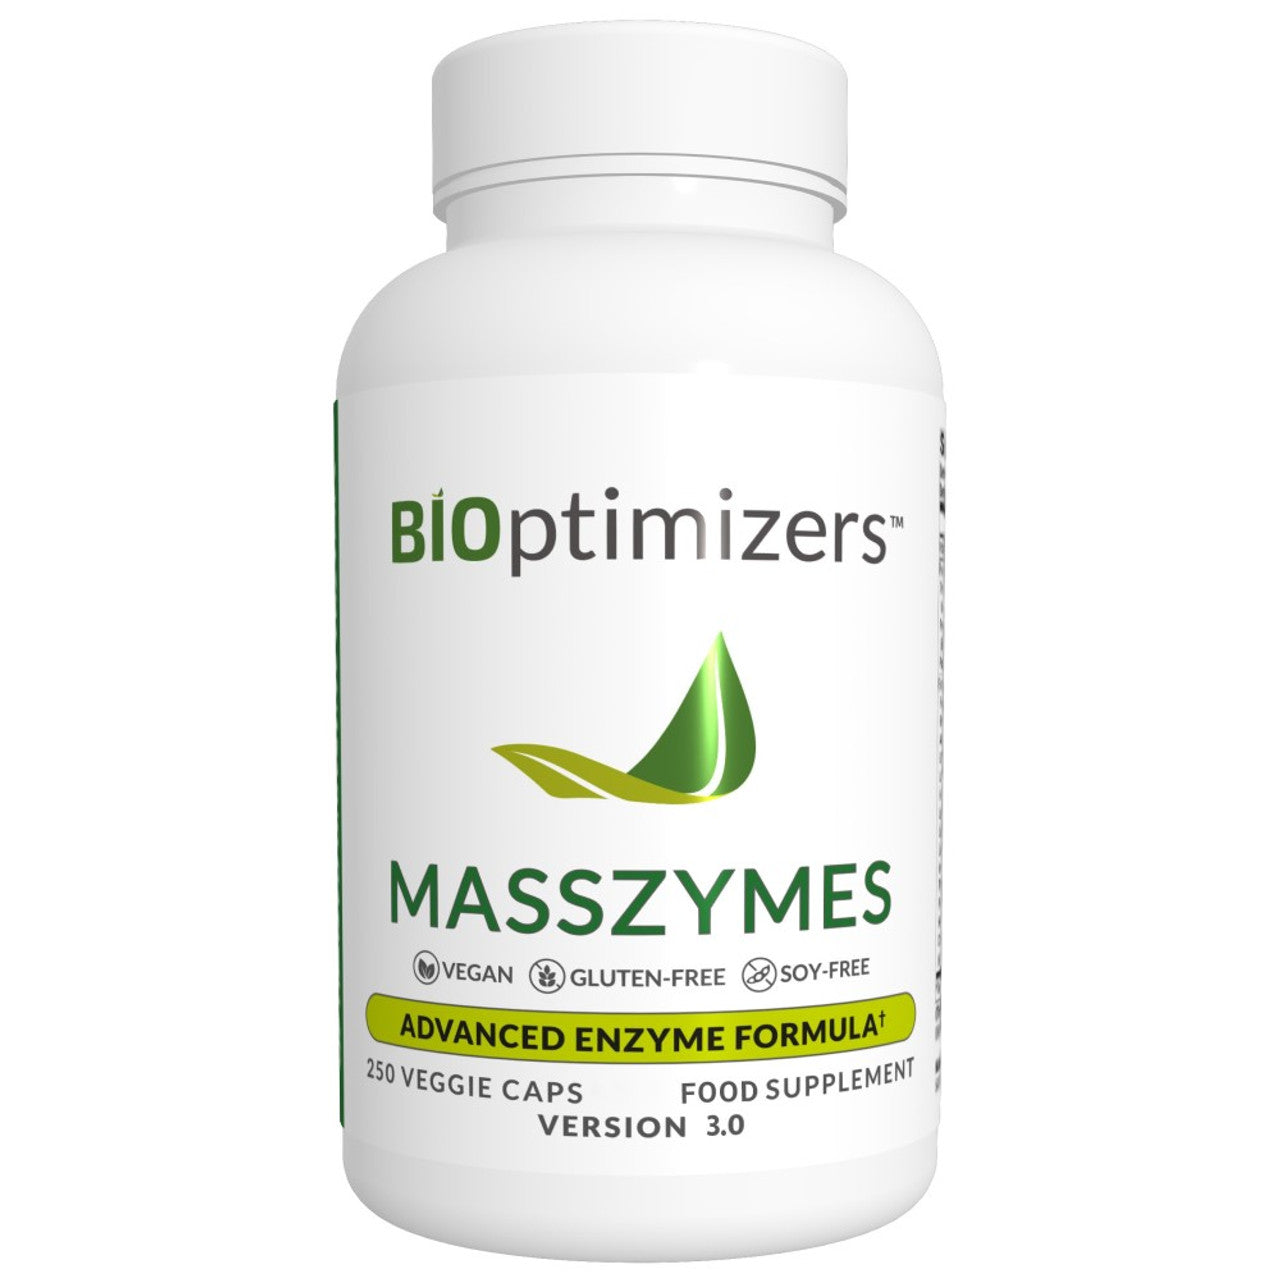 BIOptimizers MassZymes 250 粒胶囊